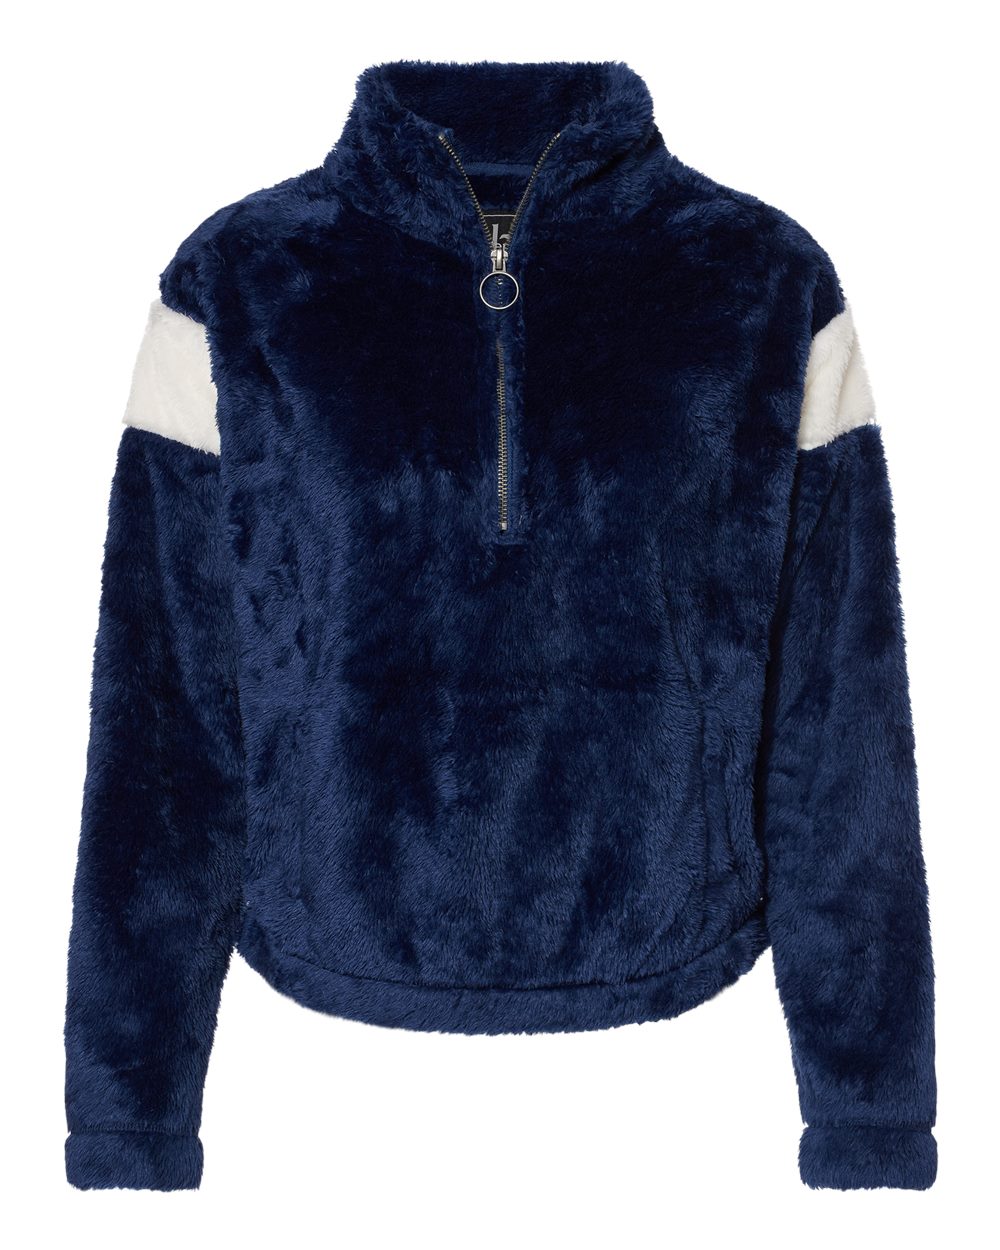 Boxercraft Women's Remy Fuzzy Fleece Pullover Jacket Coat FZ04 up to ...